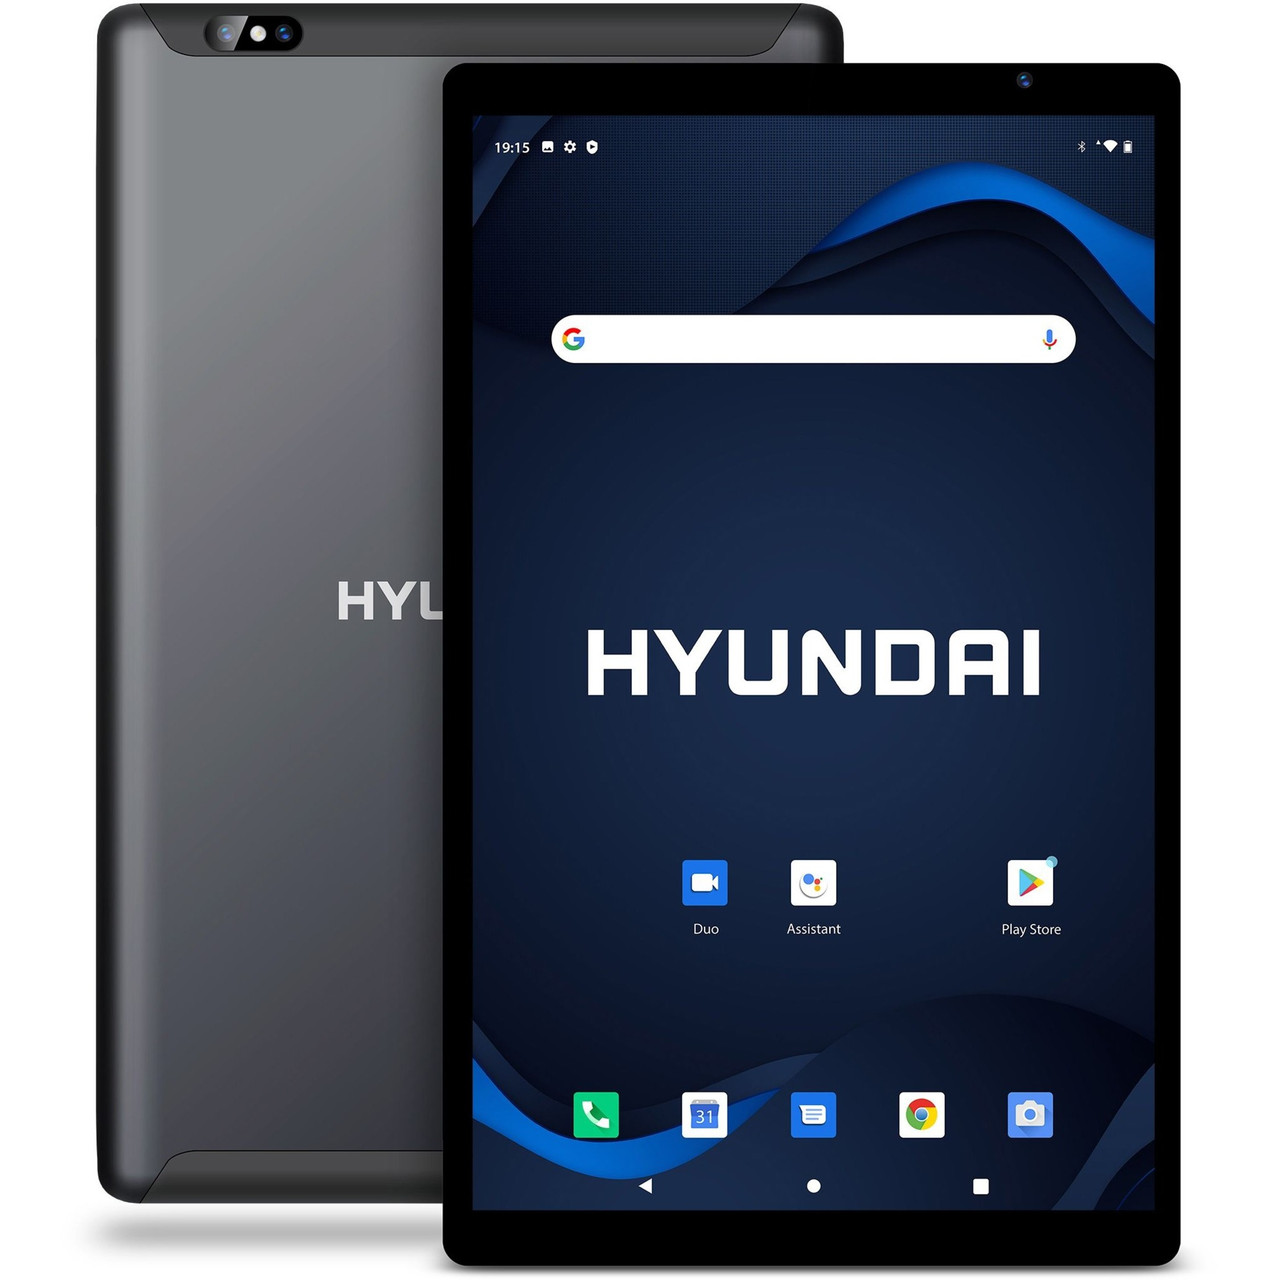 Hyundai HyTab Plus 10WB1, 10.1" Tablet, 1280x800 HD IPS, Android 10 Go edition, Quad-Core Processor, 2GB RAM, 32GB Storage, 2MP/5MP, WIFI - Space Grey - HT10WB1MSG